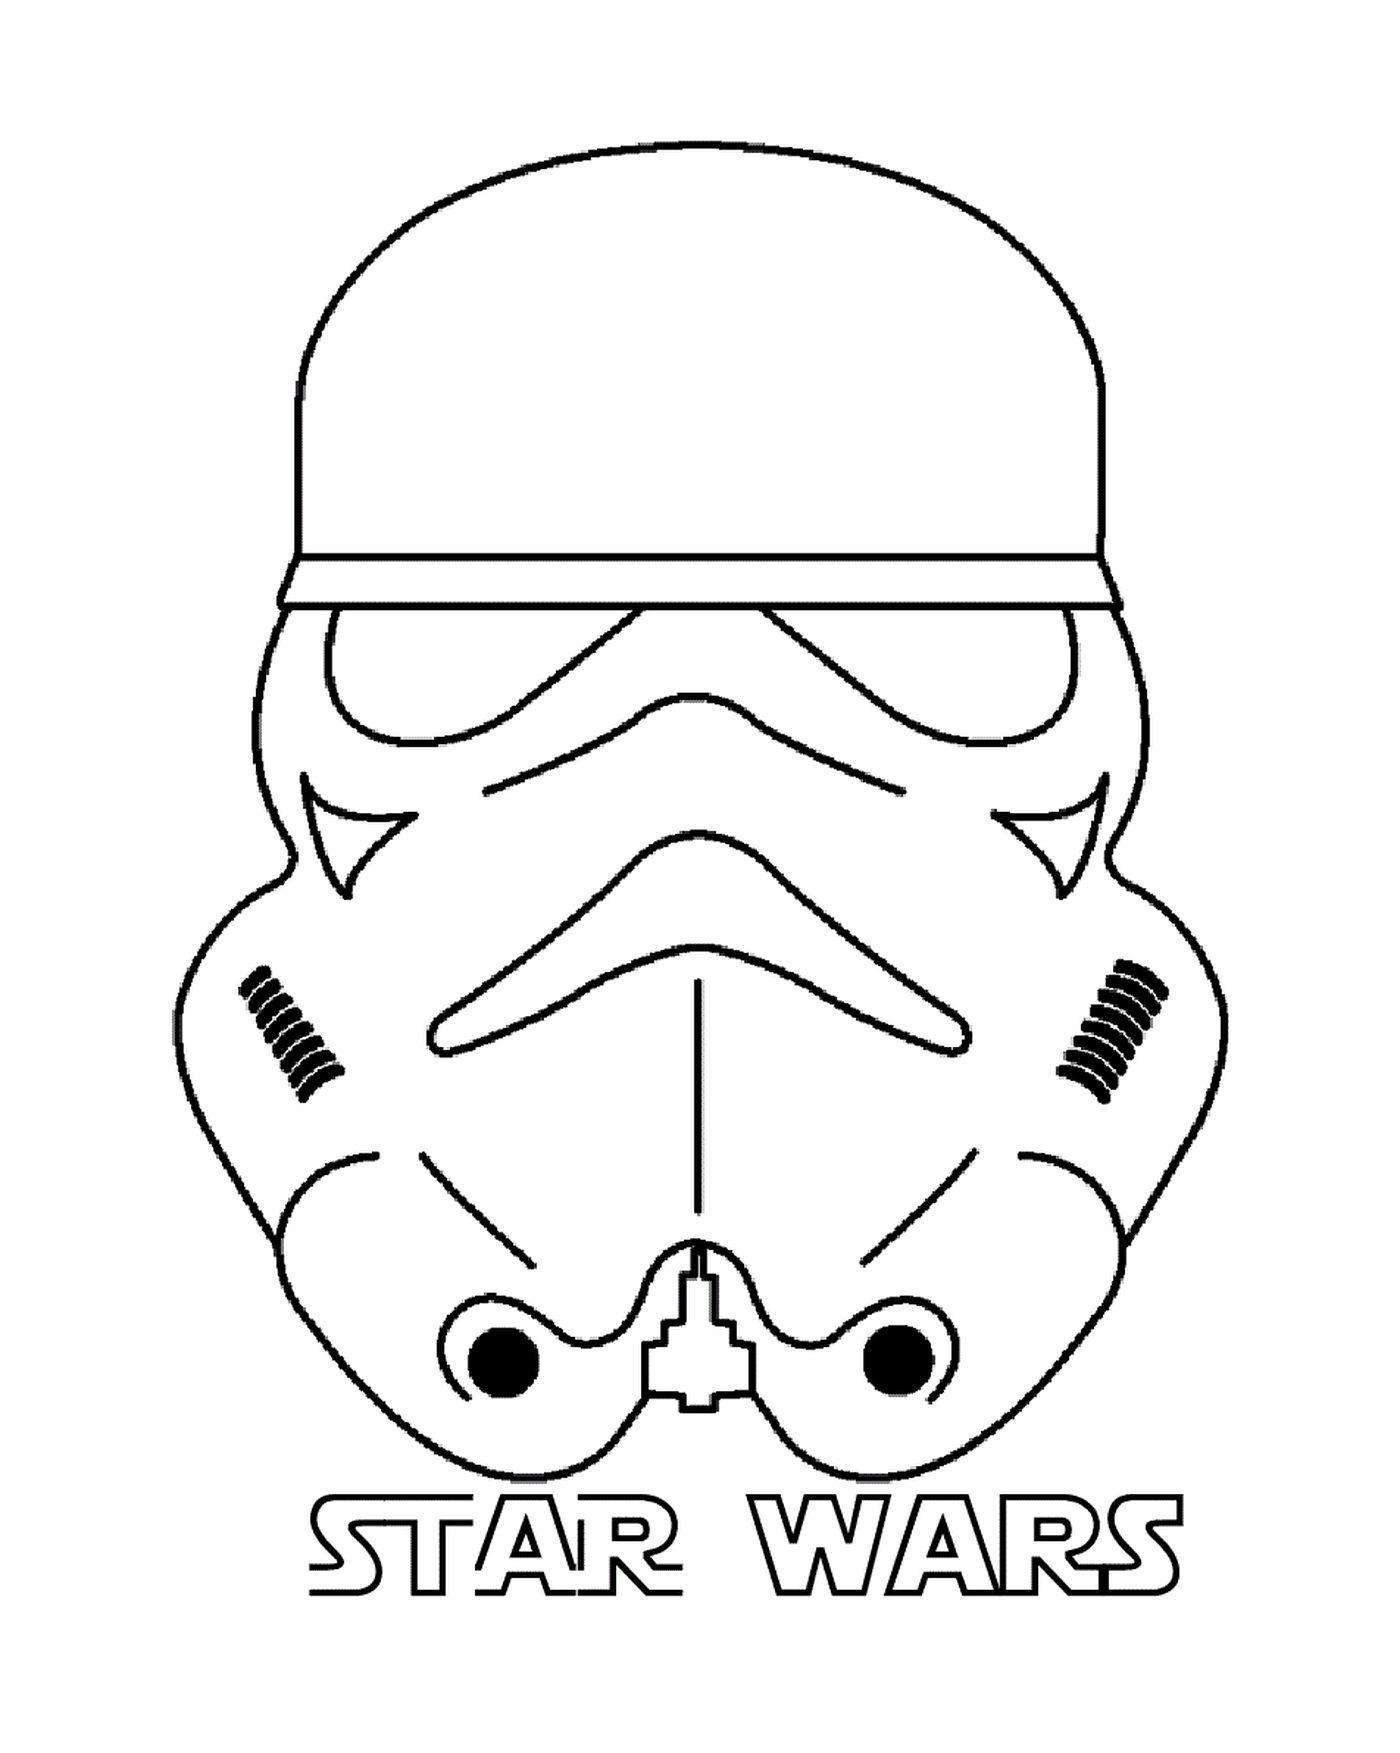  Stormtrooper's iconic helmet 